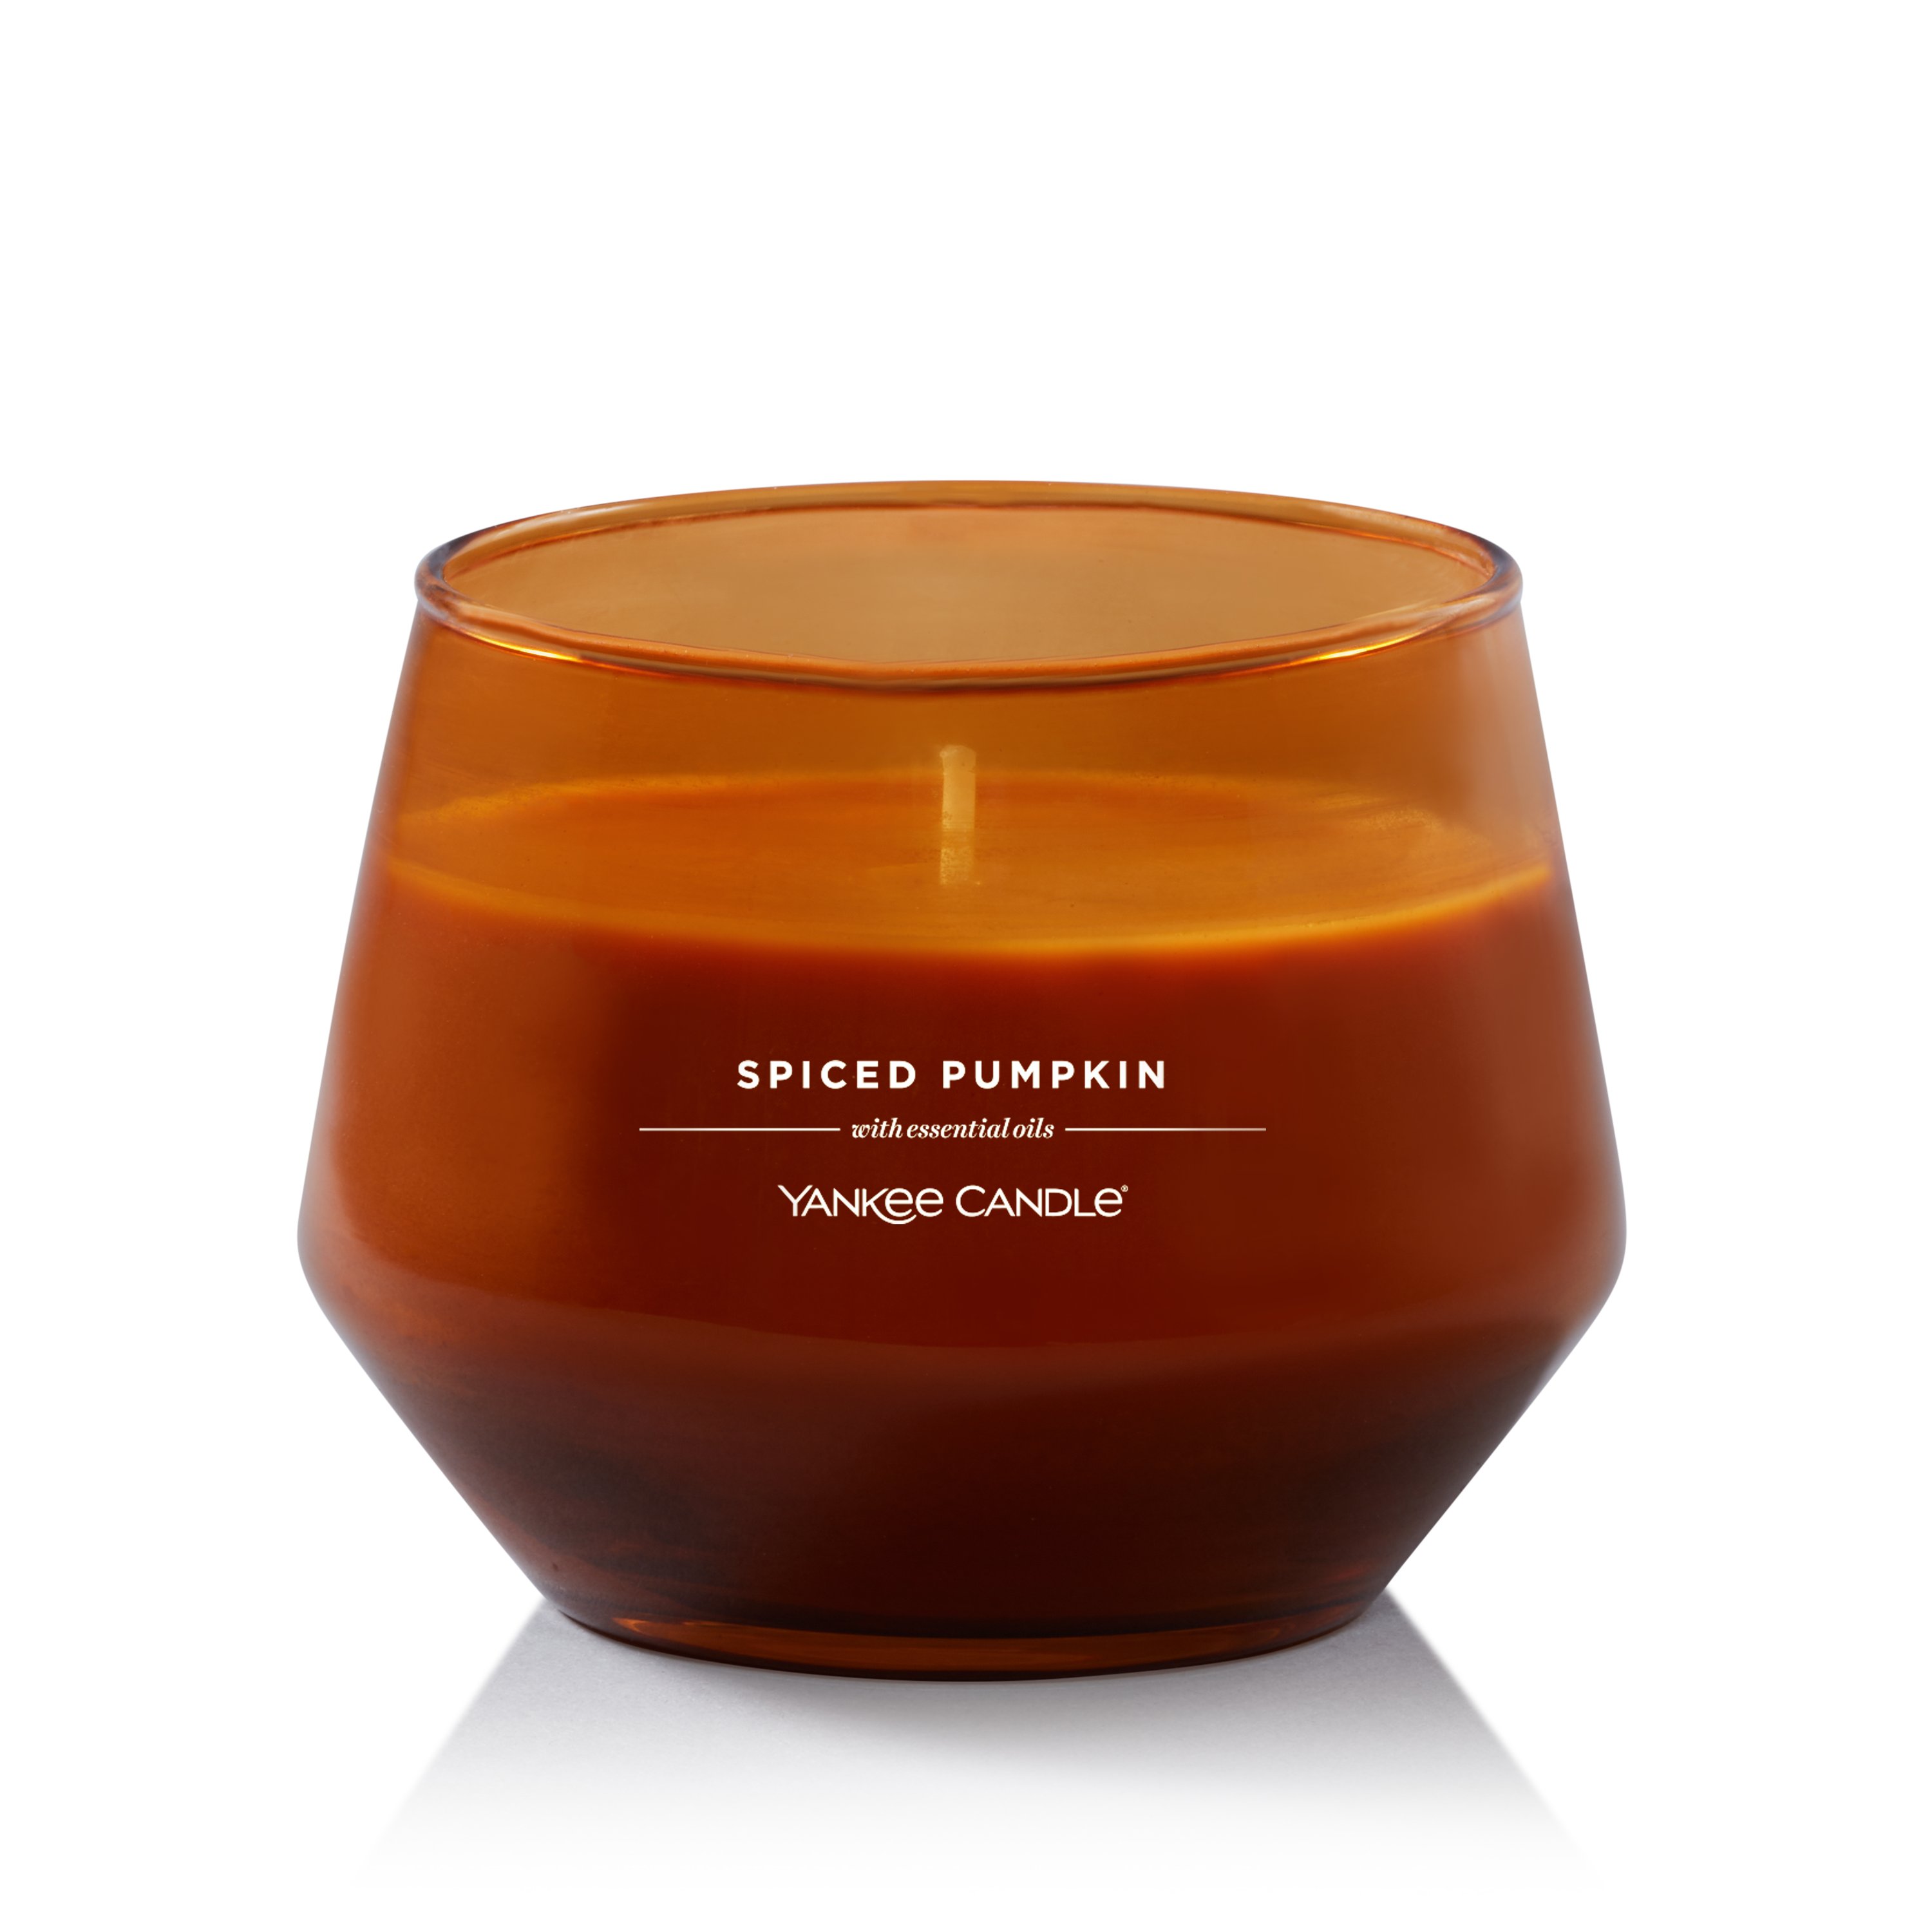 Yankee Candle Spiced Pumpkin 6 Pack Fragranced Wax Melts